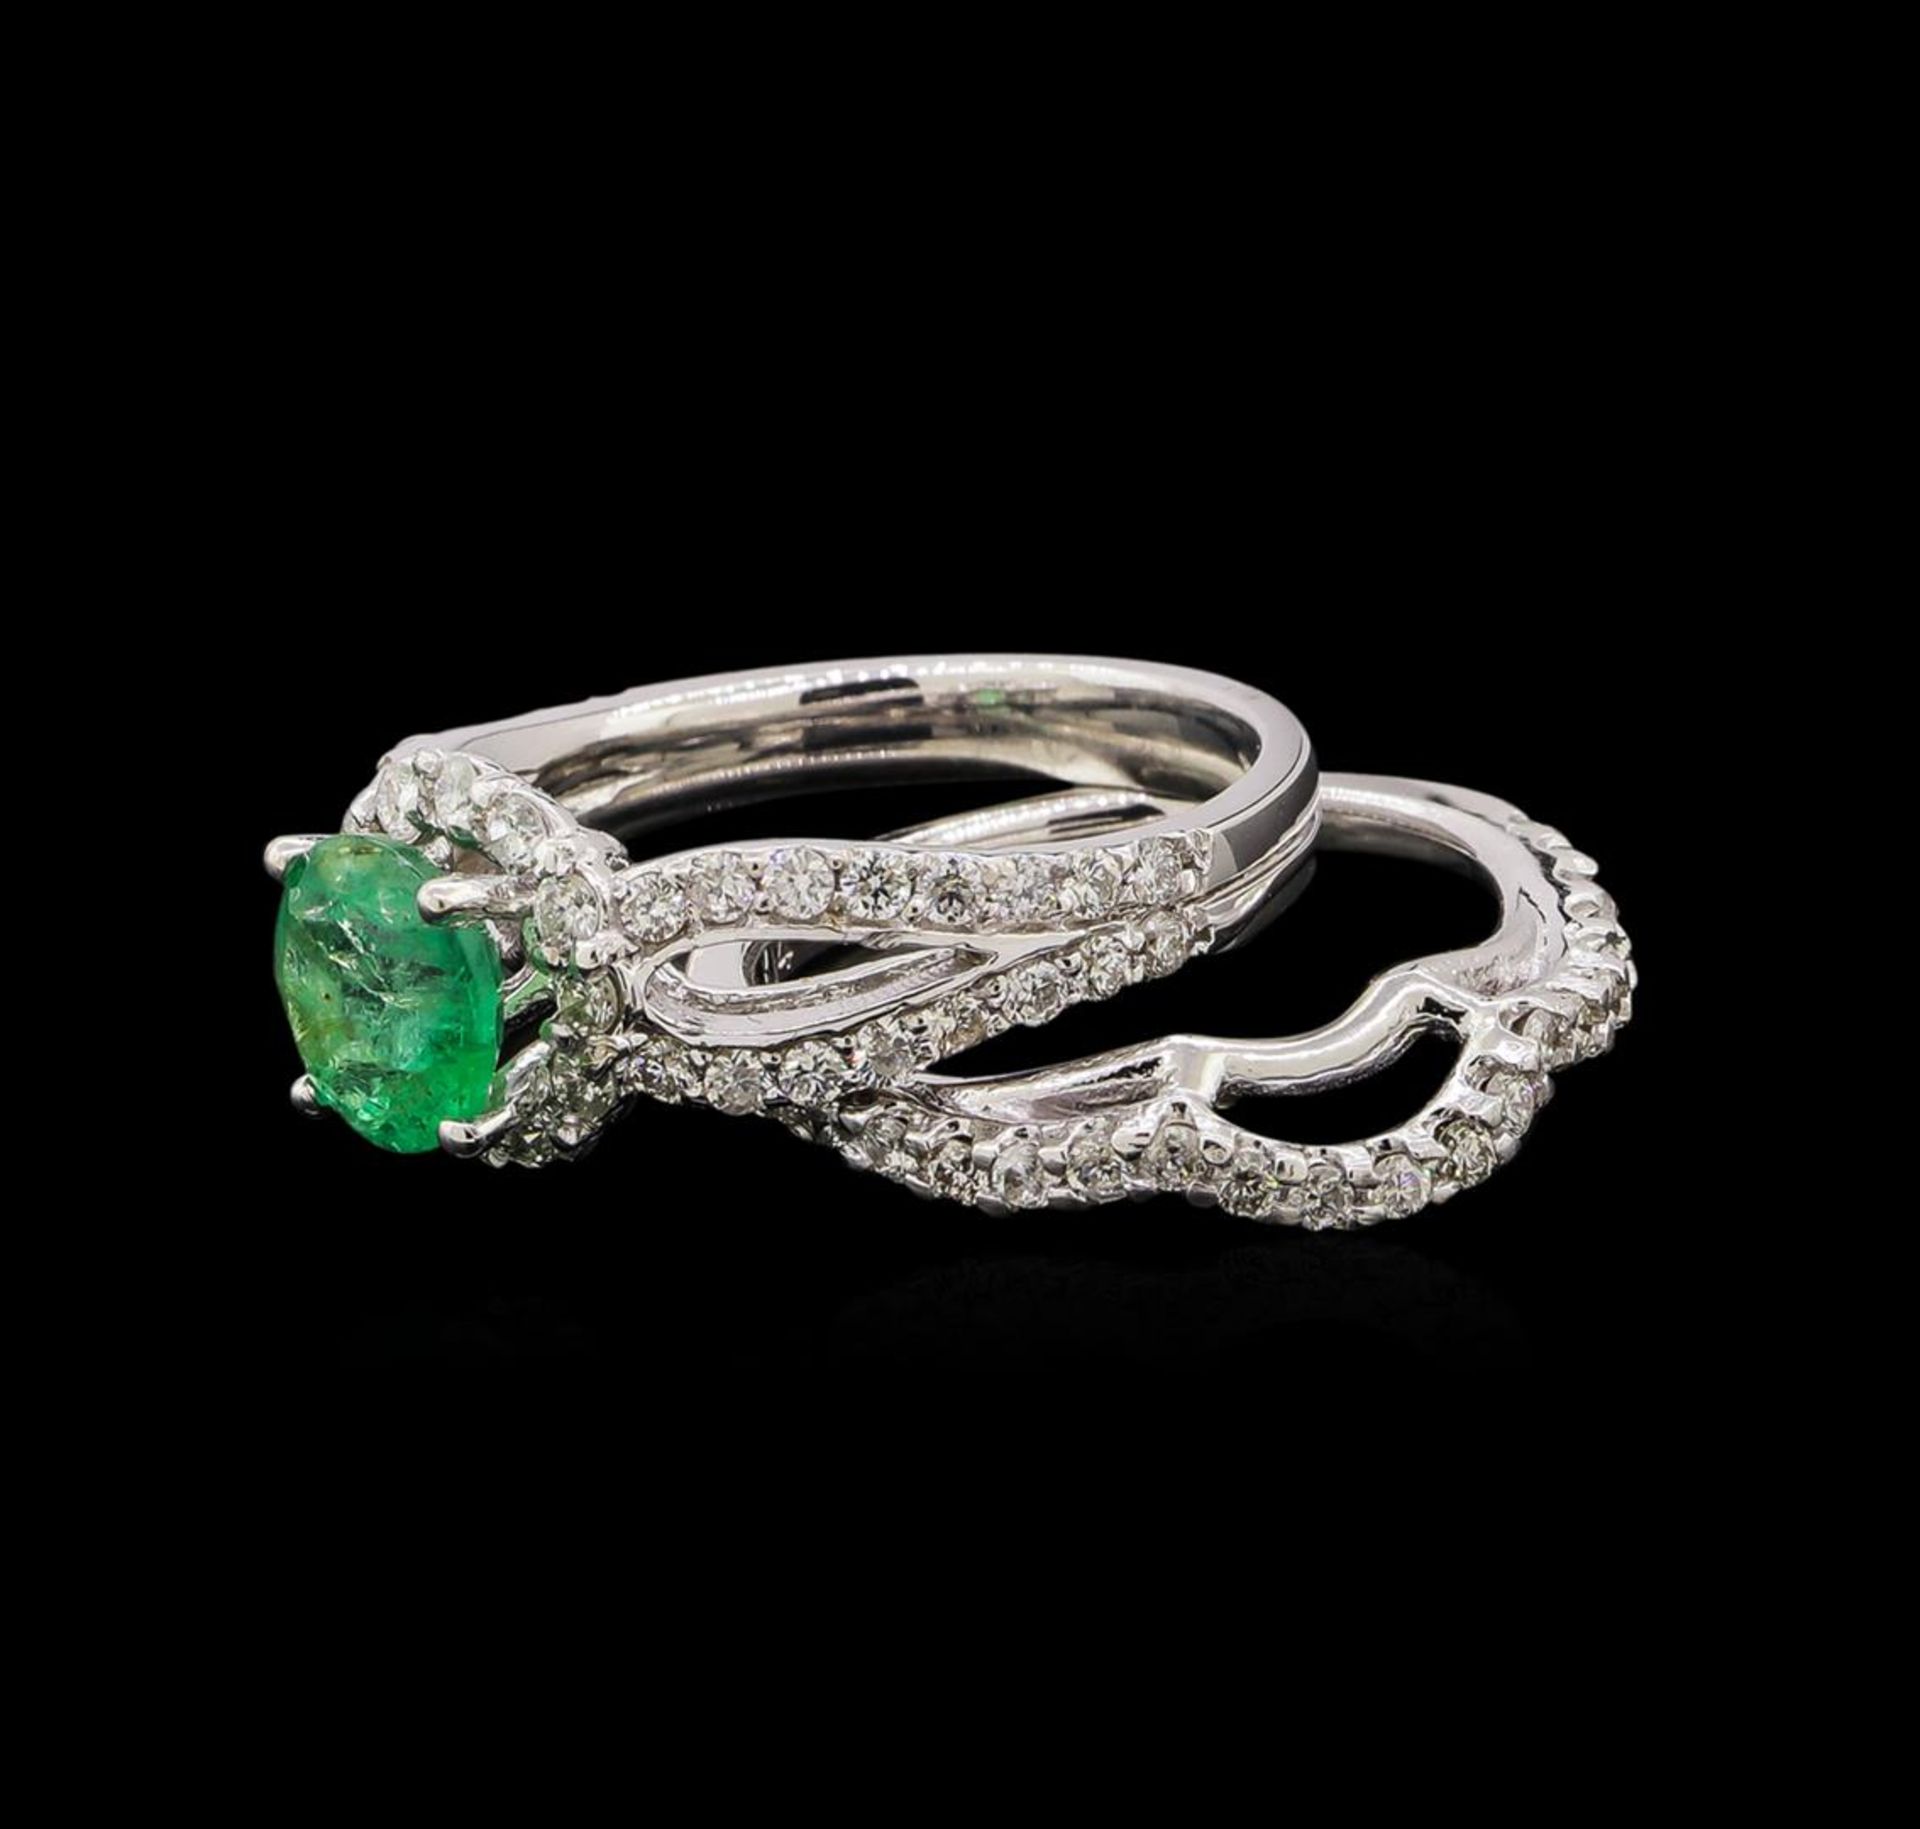 14KT White Gold 1.43 ctw Emerald and Diamond Wedding Ring Set - Image 3 of 4